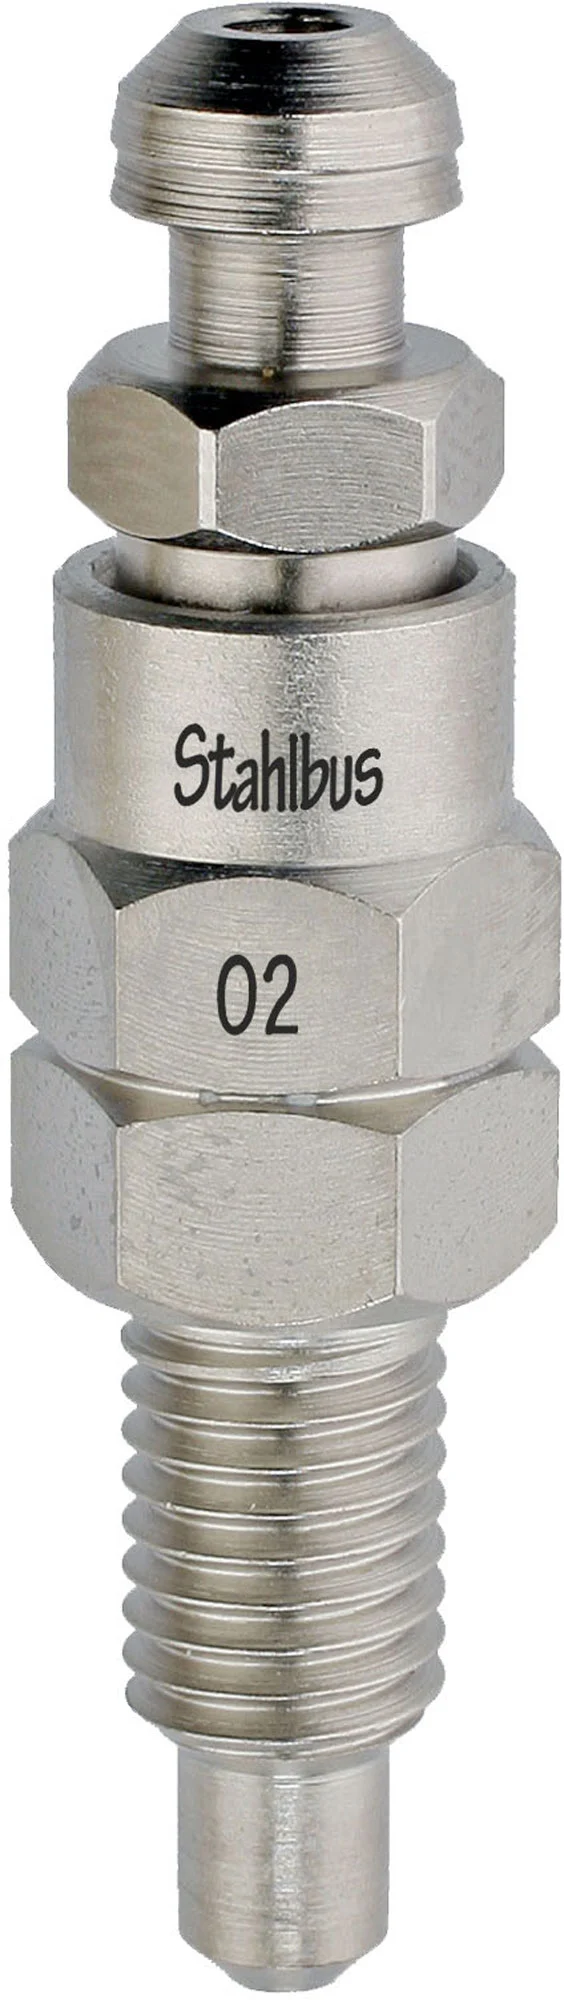 Stahlbus Stahlbus vis de purge freins avec clapet non-retour